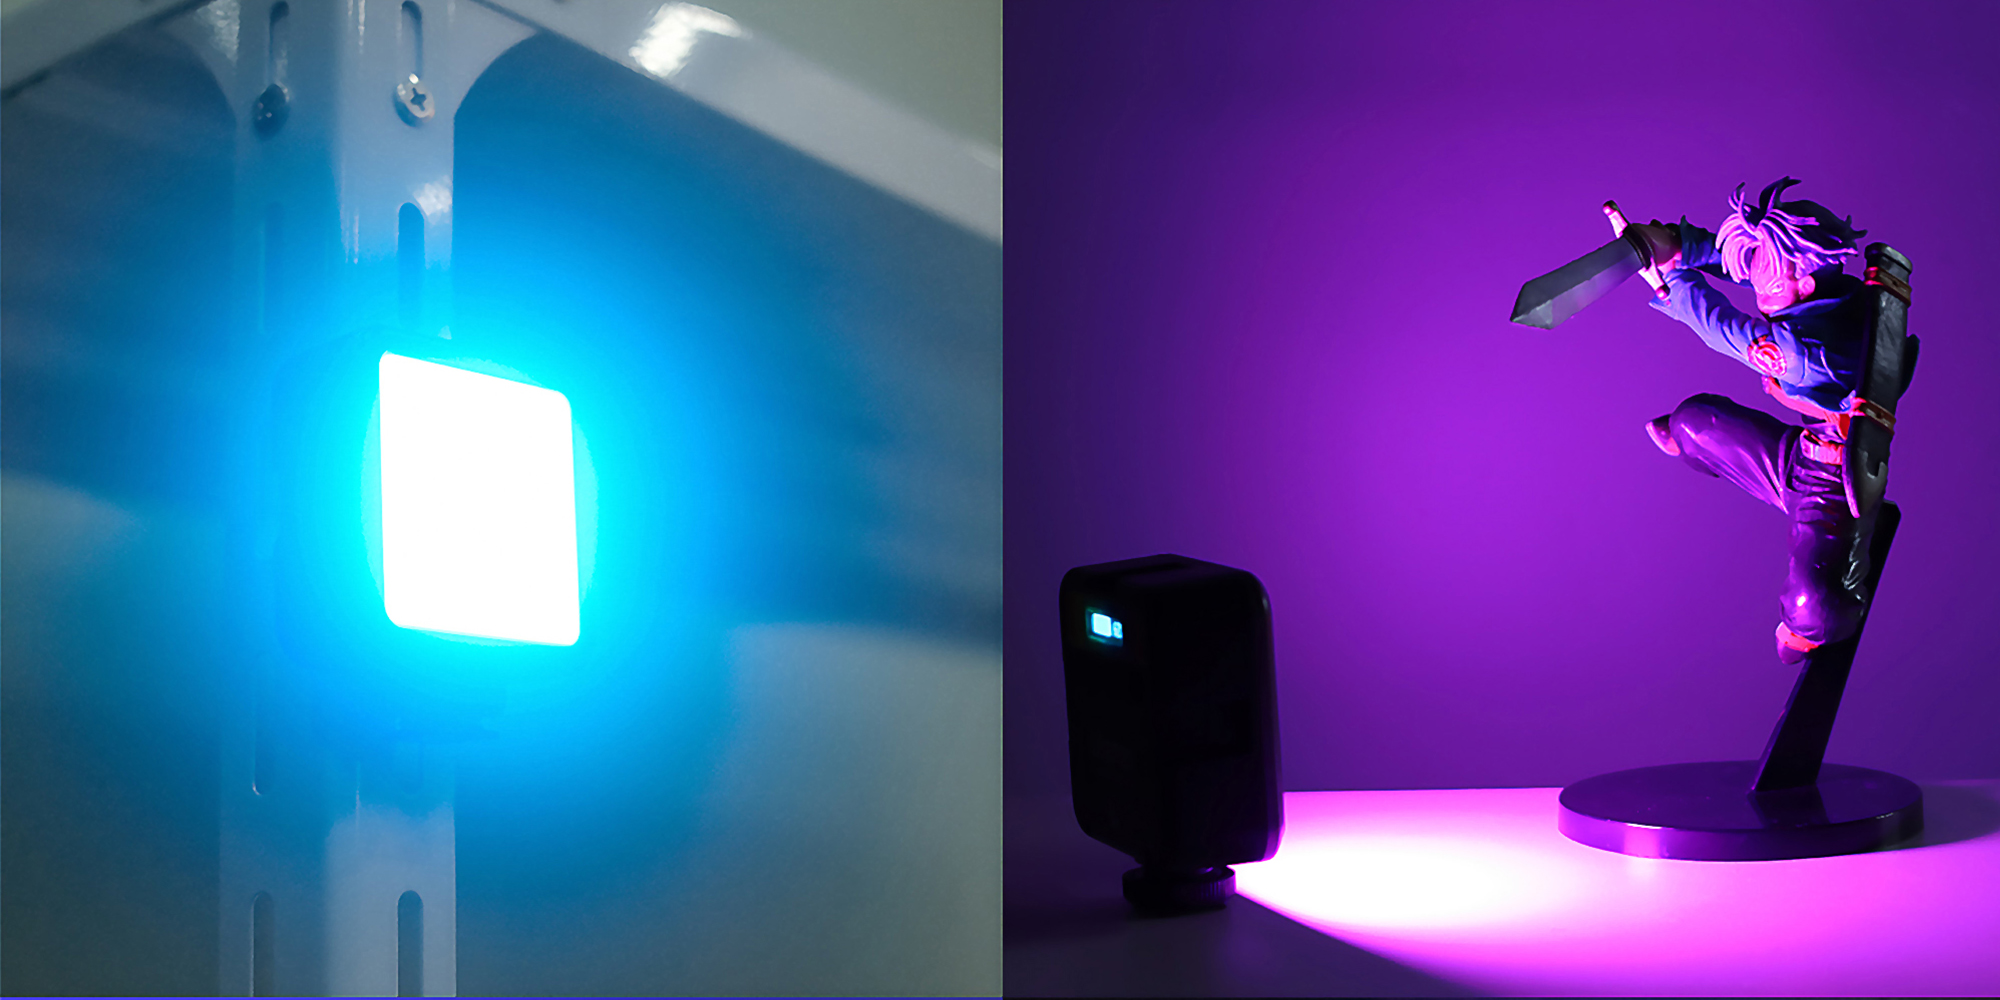 Lampa LED Ulanzi VL49 - RGB, WB (2500 K - 9000 K) - Szybki i wygodny montaż